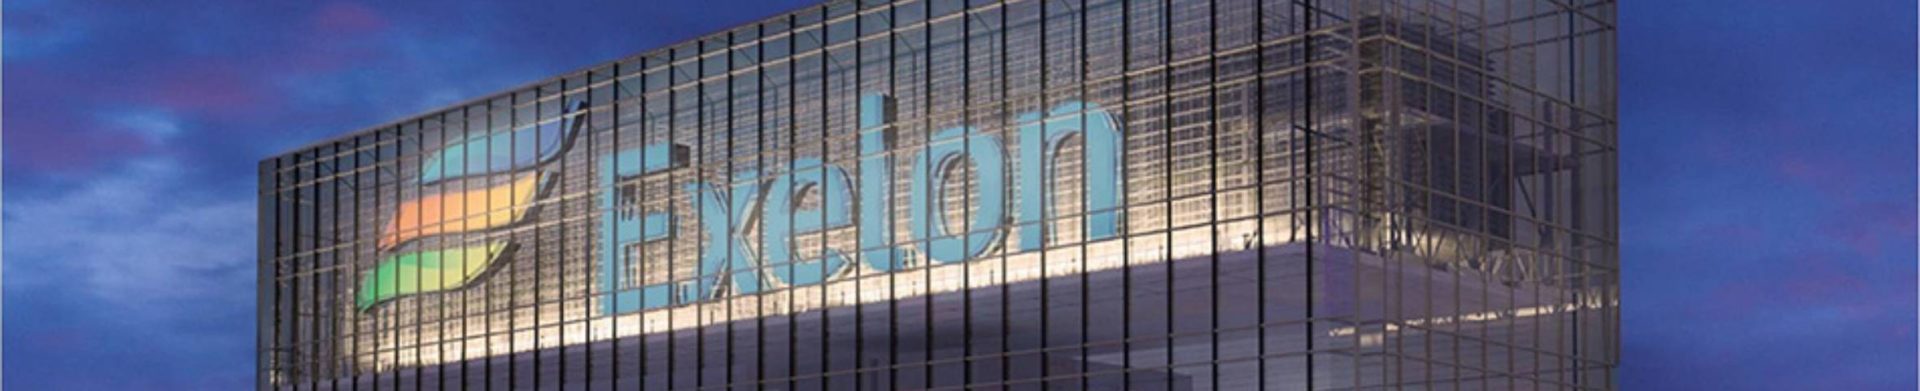 Exelon company logo on a building